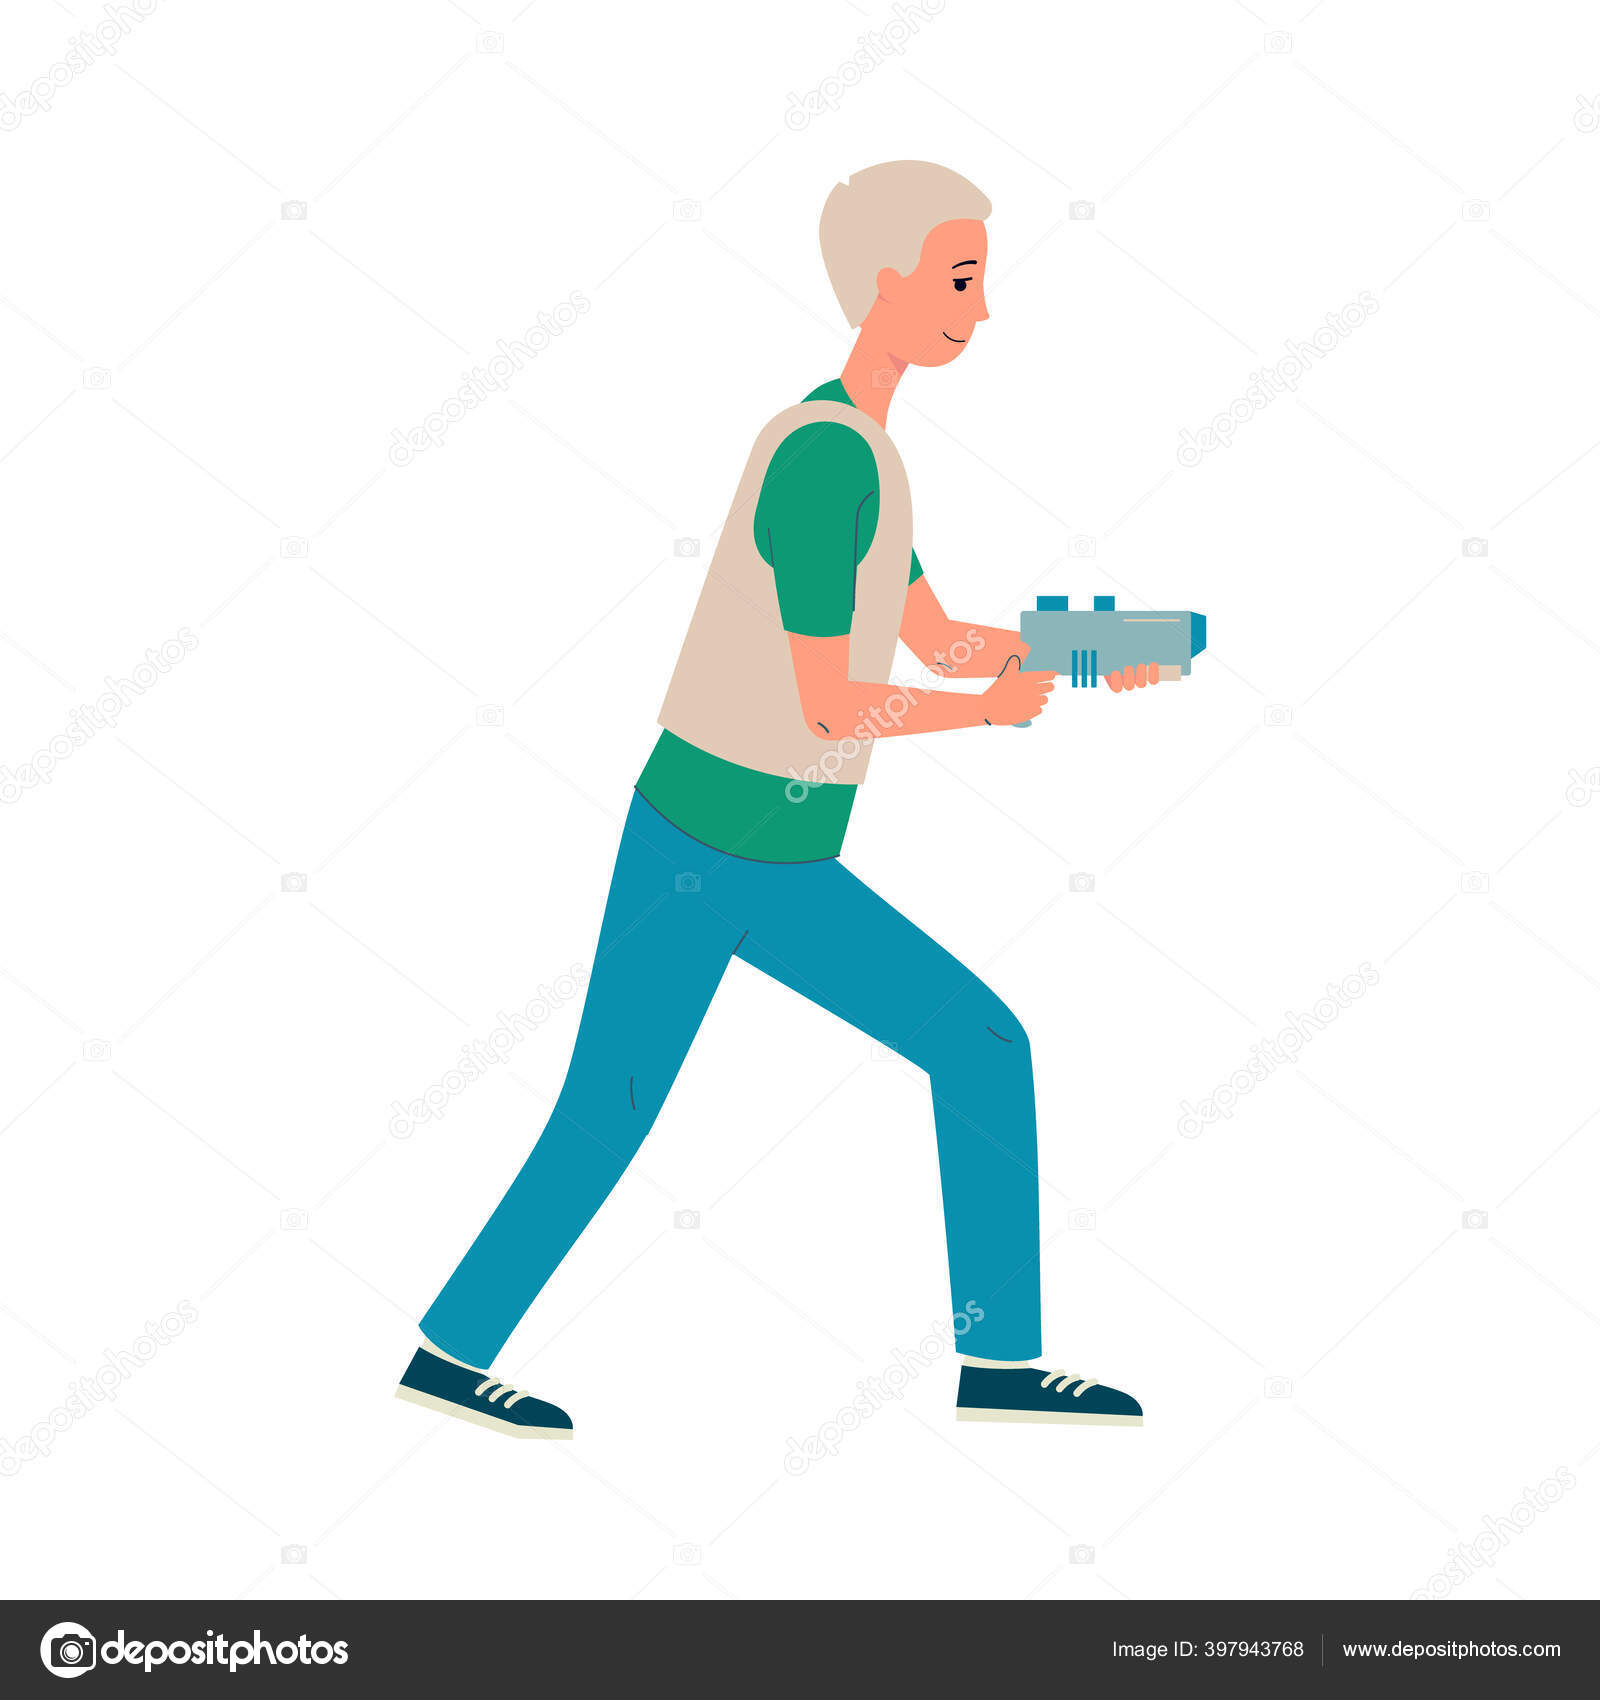 Cartoon man playing laser tag game holding a gun and walking Stock